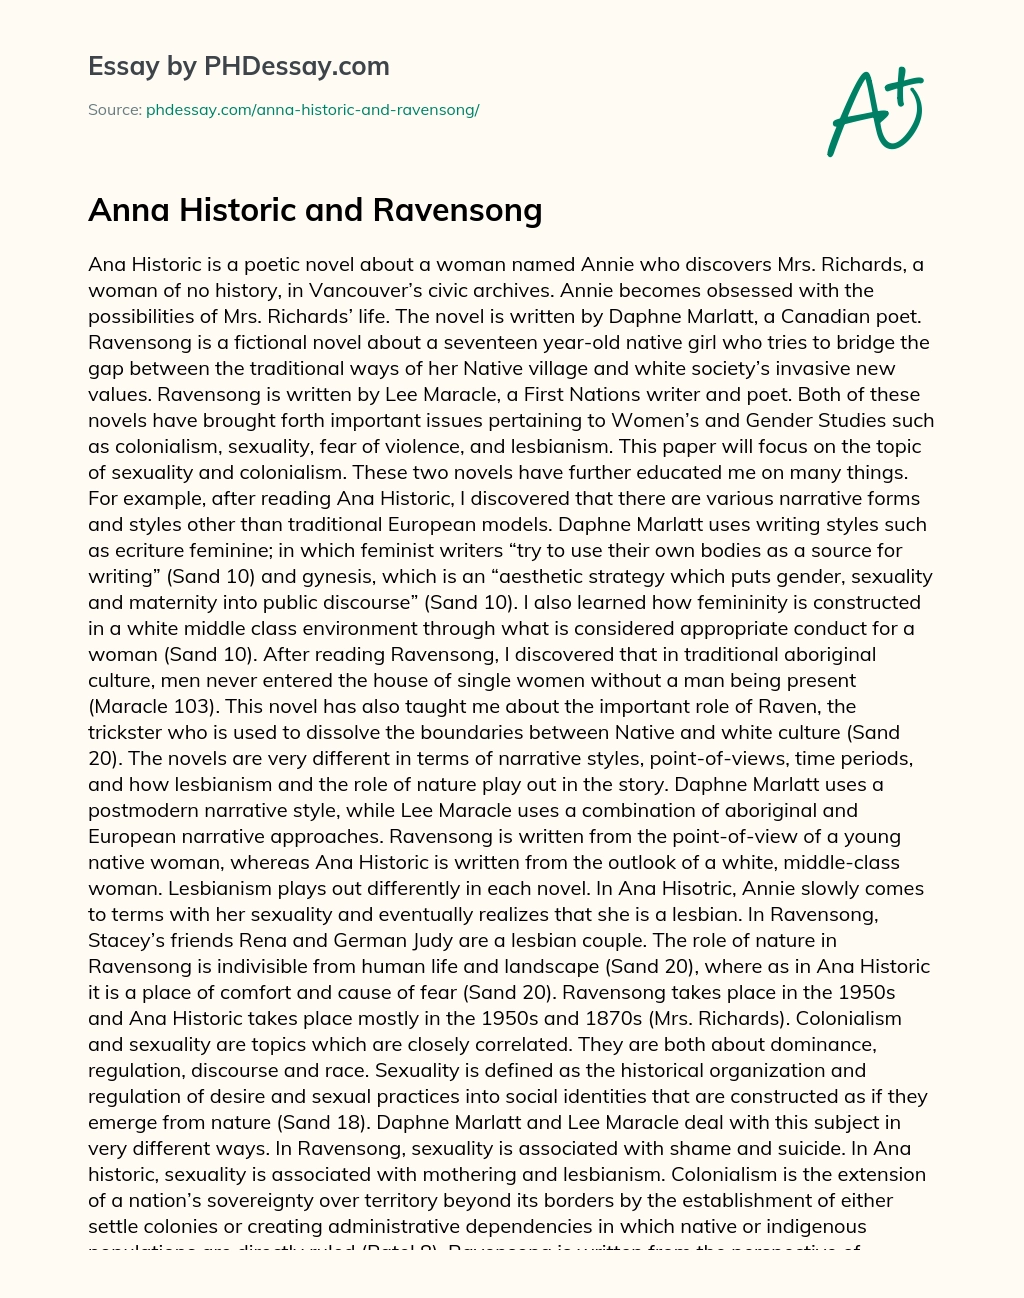 Anna Historic and Ravensong essay